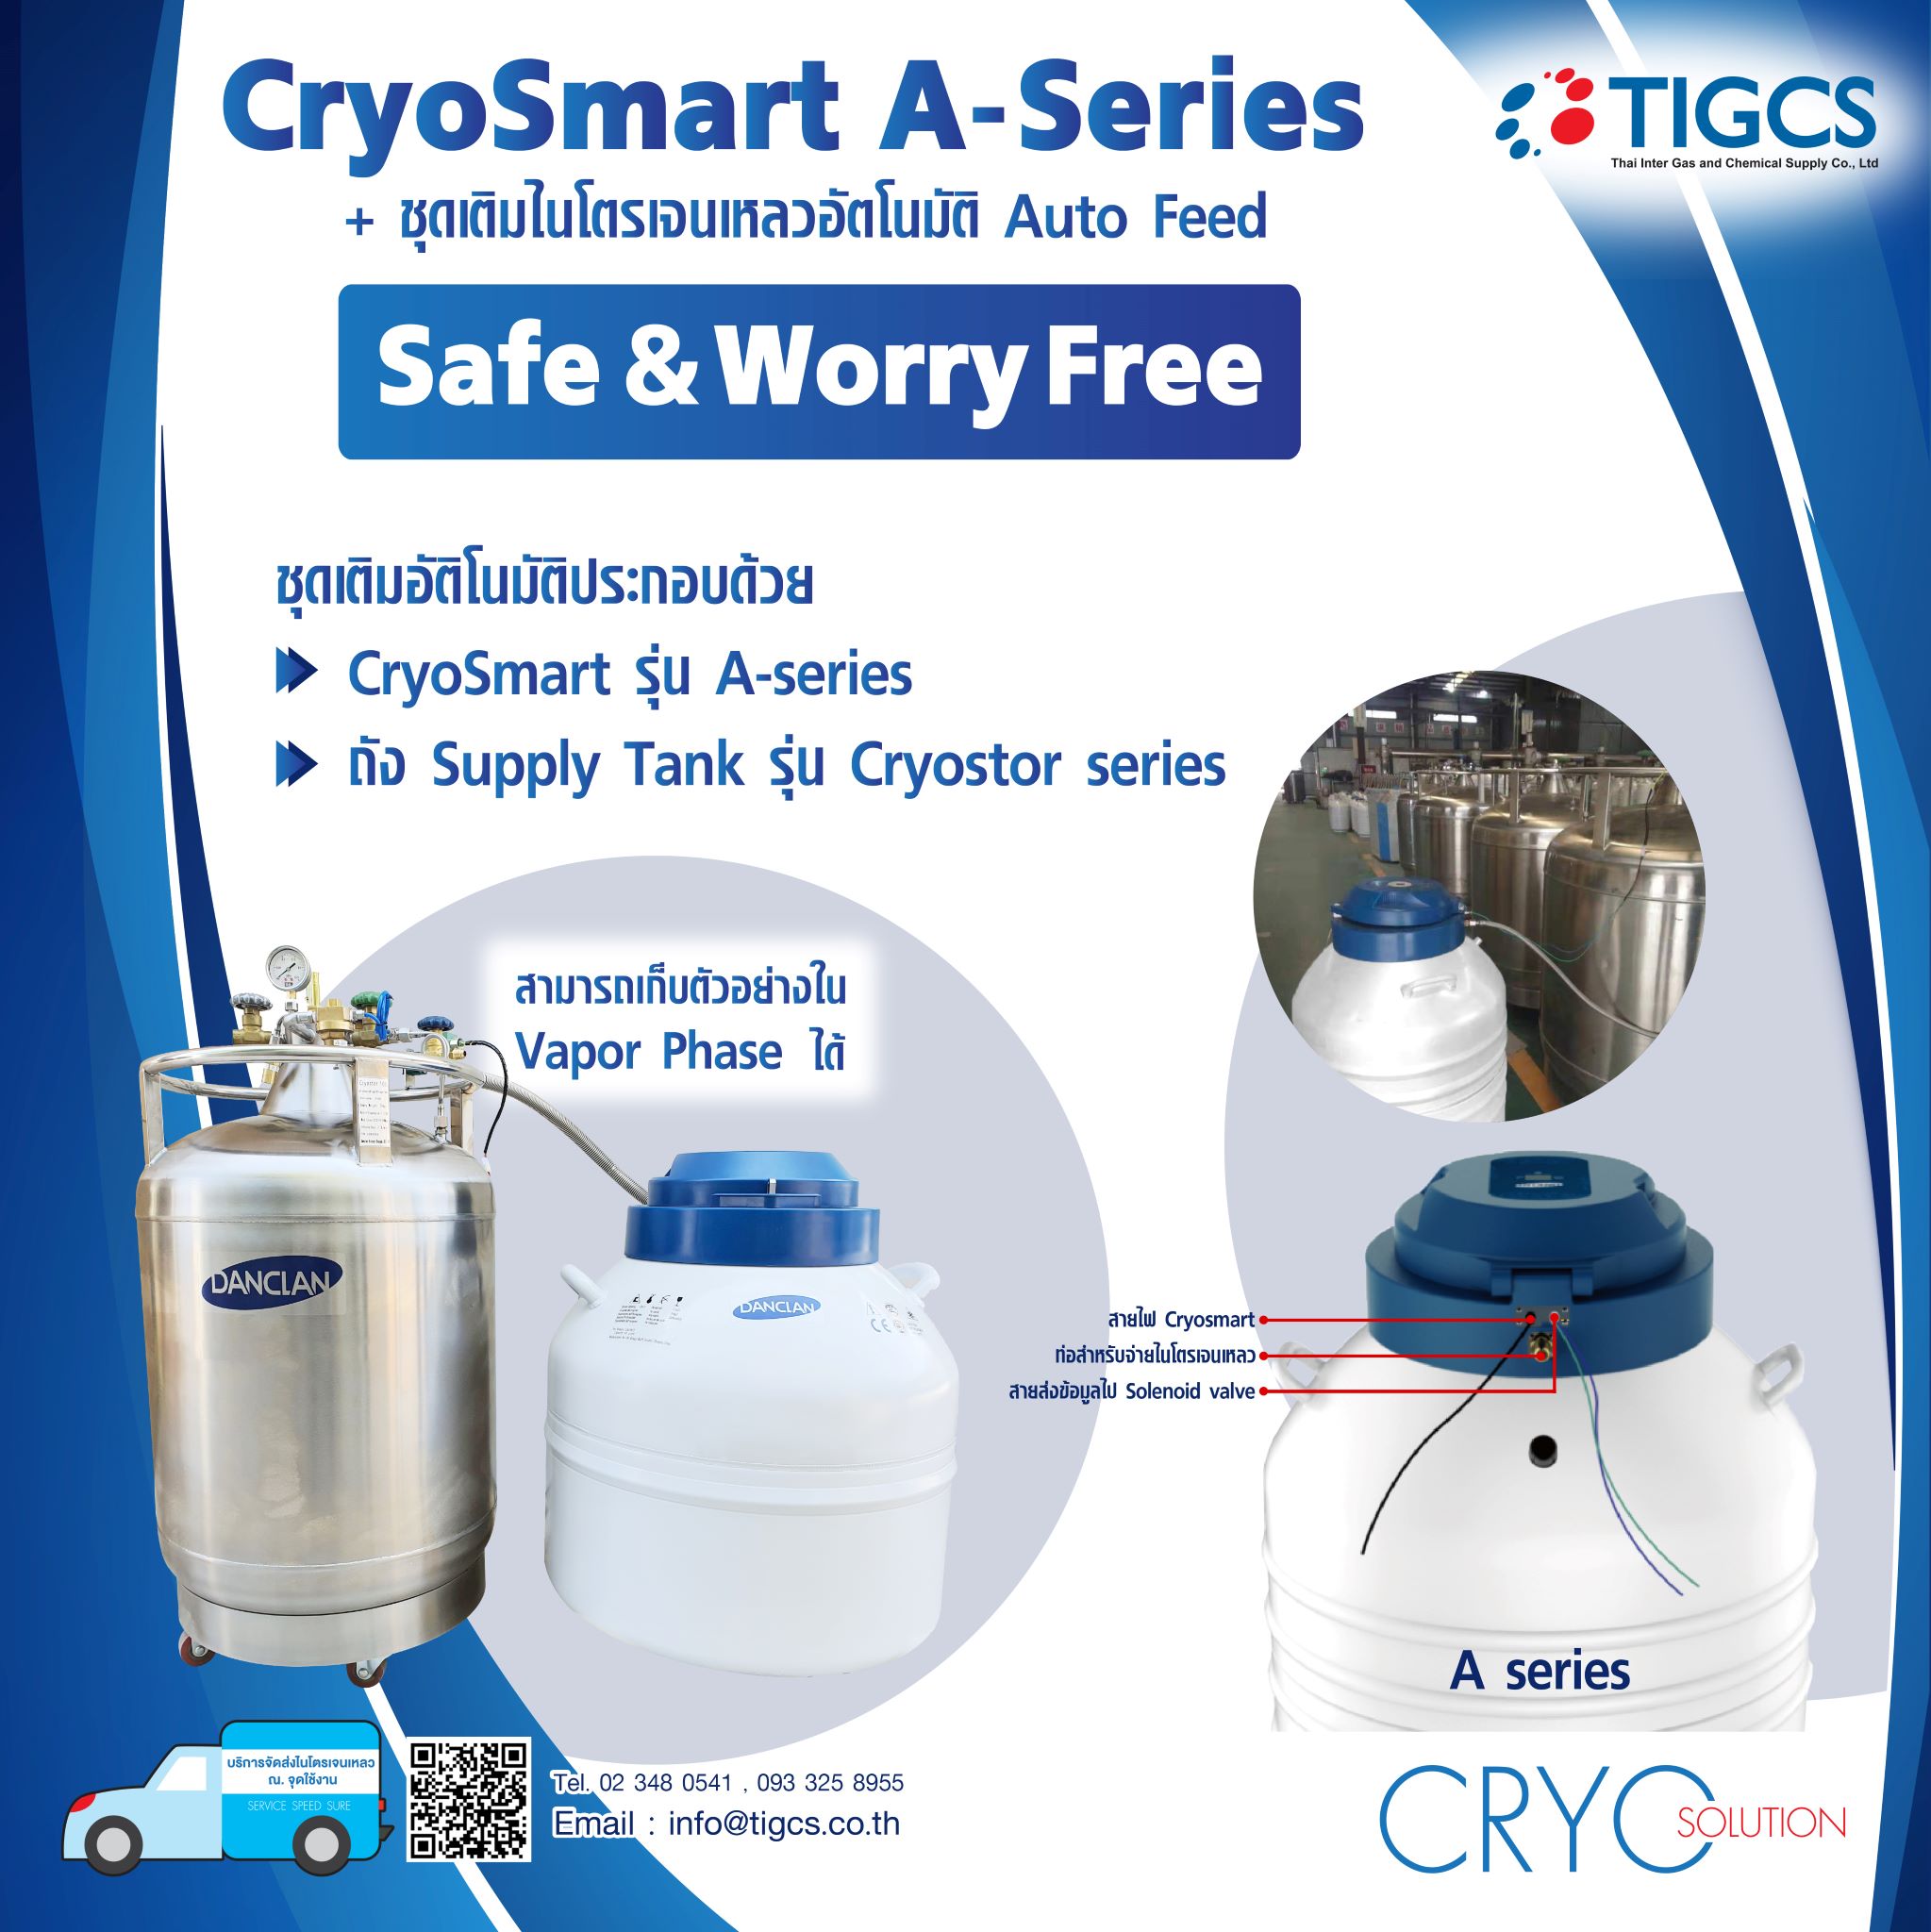 CryoSmart A-Series + ชุดเติมไนโตรเจนเหลวอัตโนมัติ (Auto Feed)